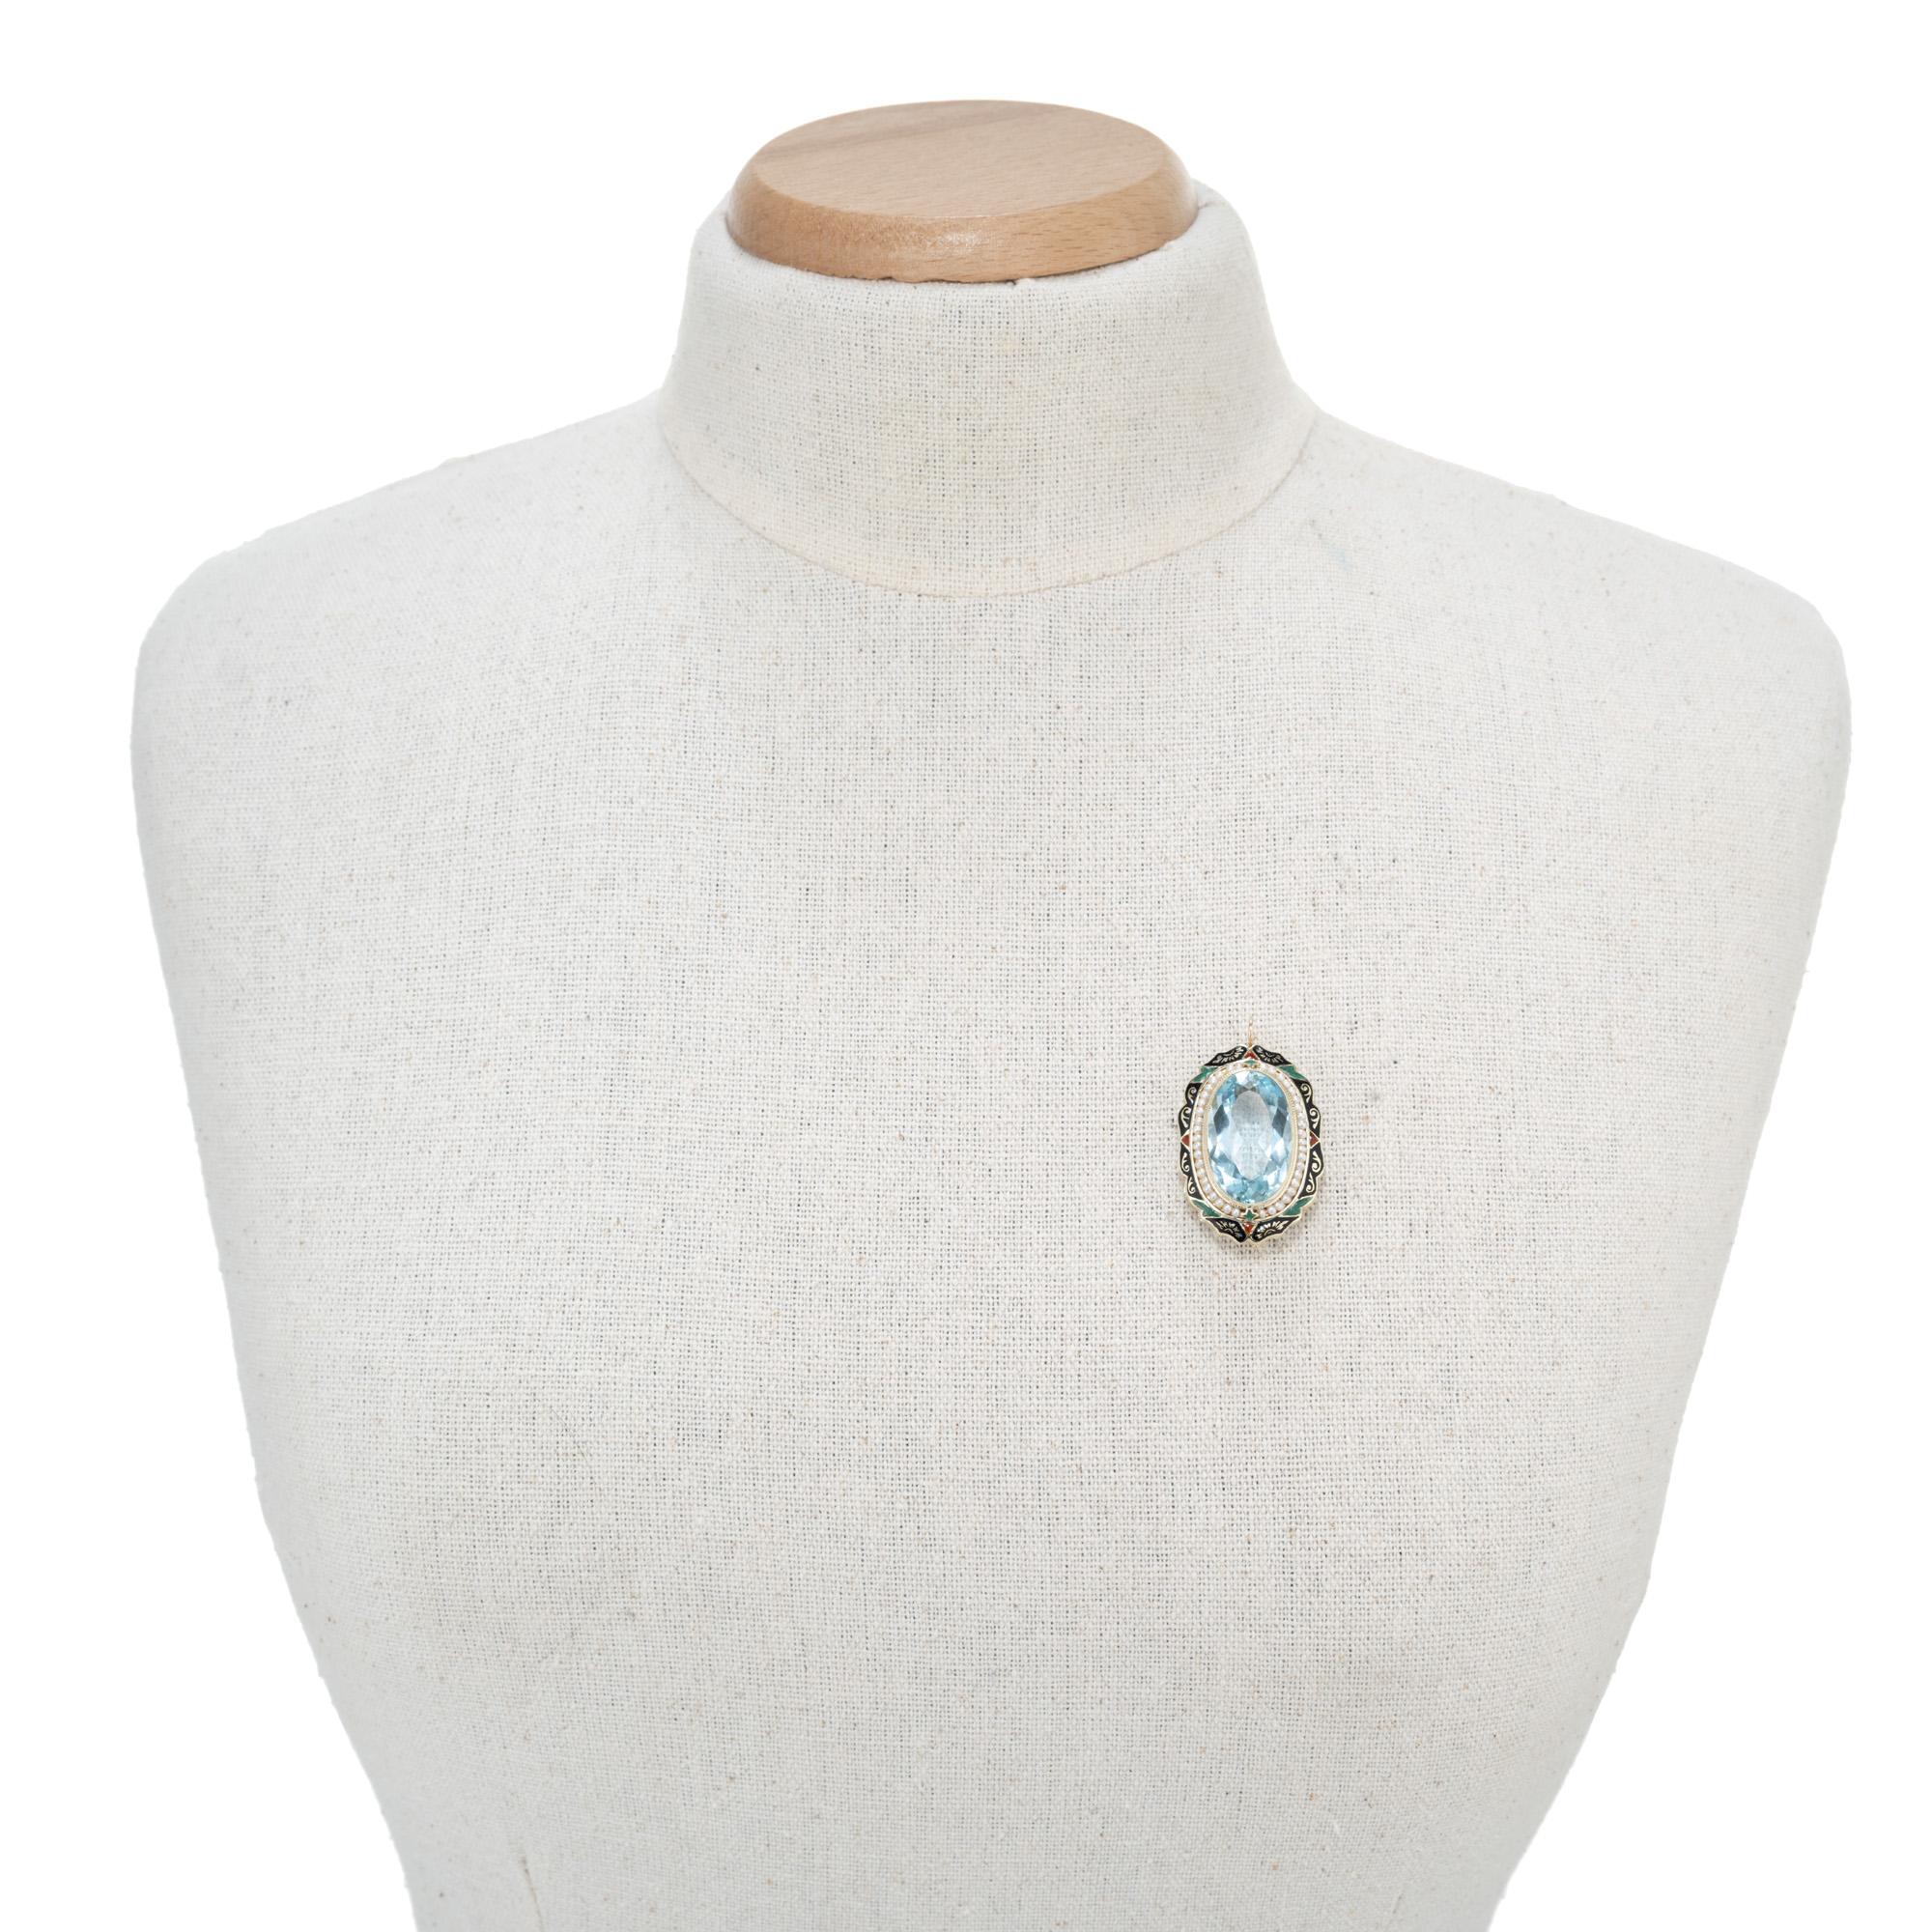 Oval 11.35 Carat Aqua Pearl Halo Enamel Gold Art Deco Brooch Pendant Necklace For Sale 1